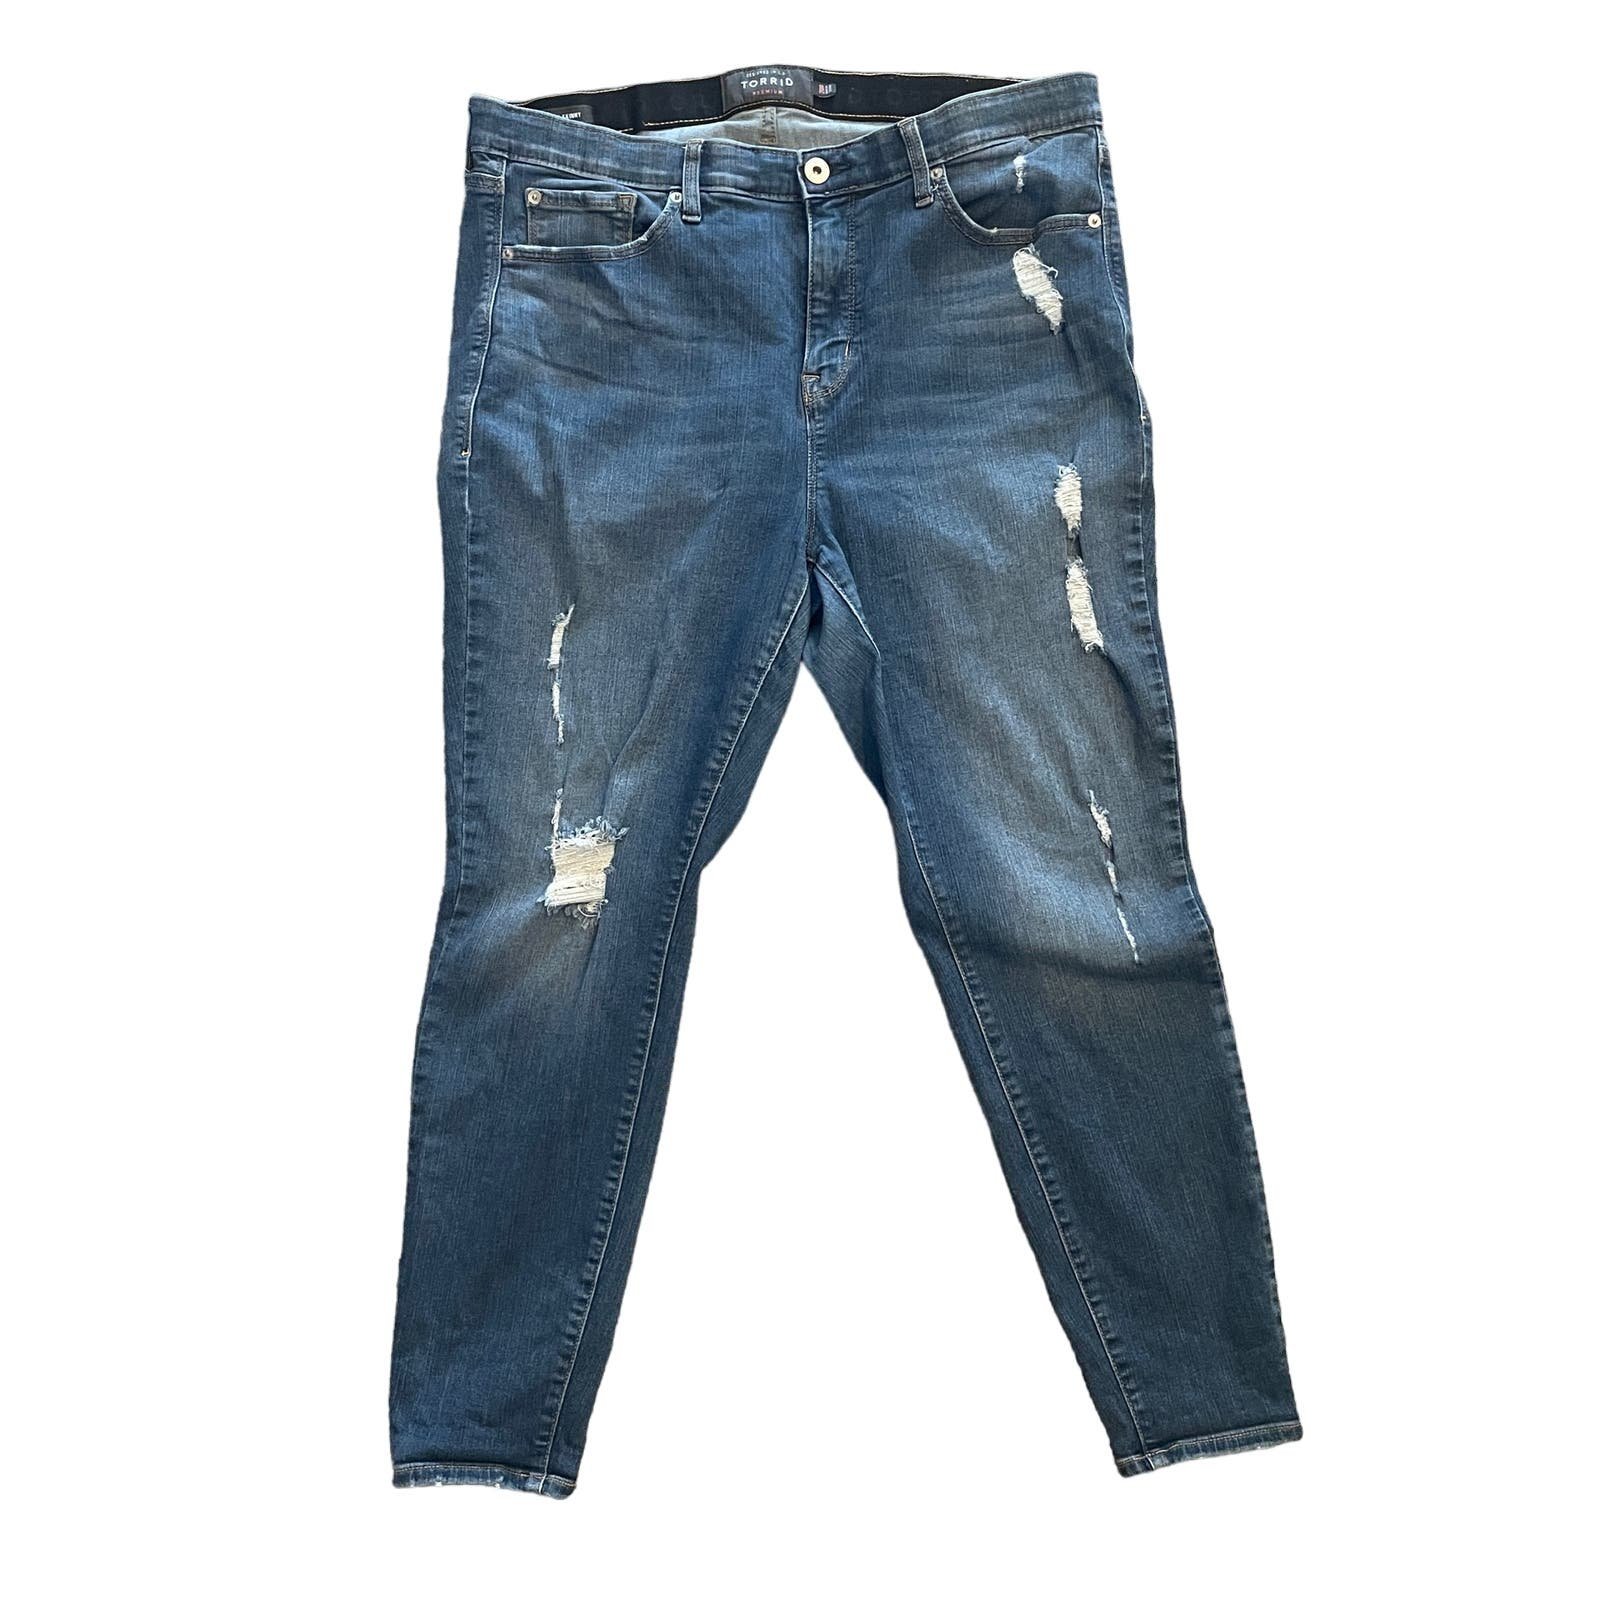 Gorgeous Torrid Women’s 20R Jeans Sky high Skinny Distressed Medium Wash Denim Pants H2oyuYT6T on sale